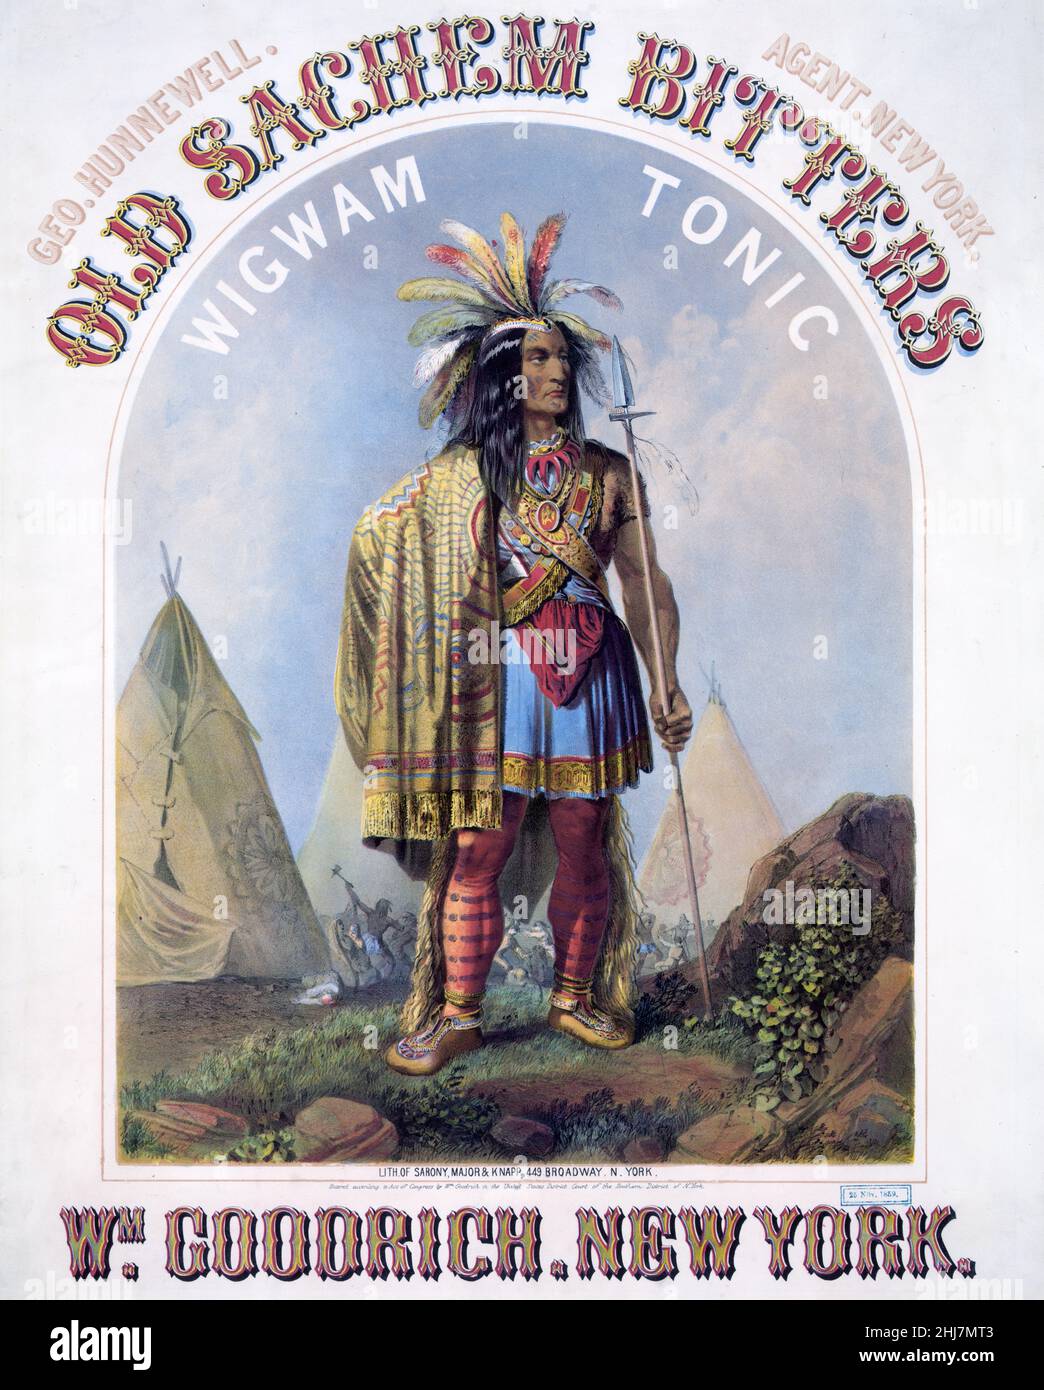 Antique and vintage illustration - Native american / Old Sachem bitters - wigwam tonic - Wm. Goodrich, New York, Sarony, Major & Knapp Lith. 1859. Stock Photo